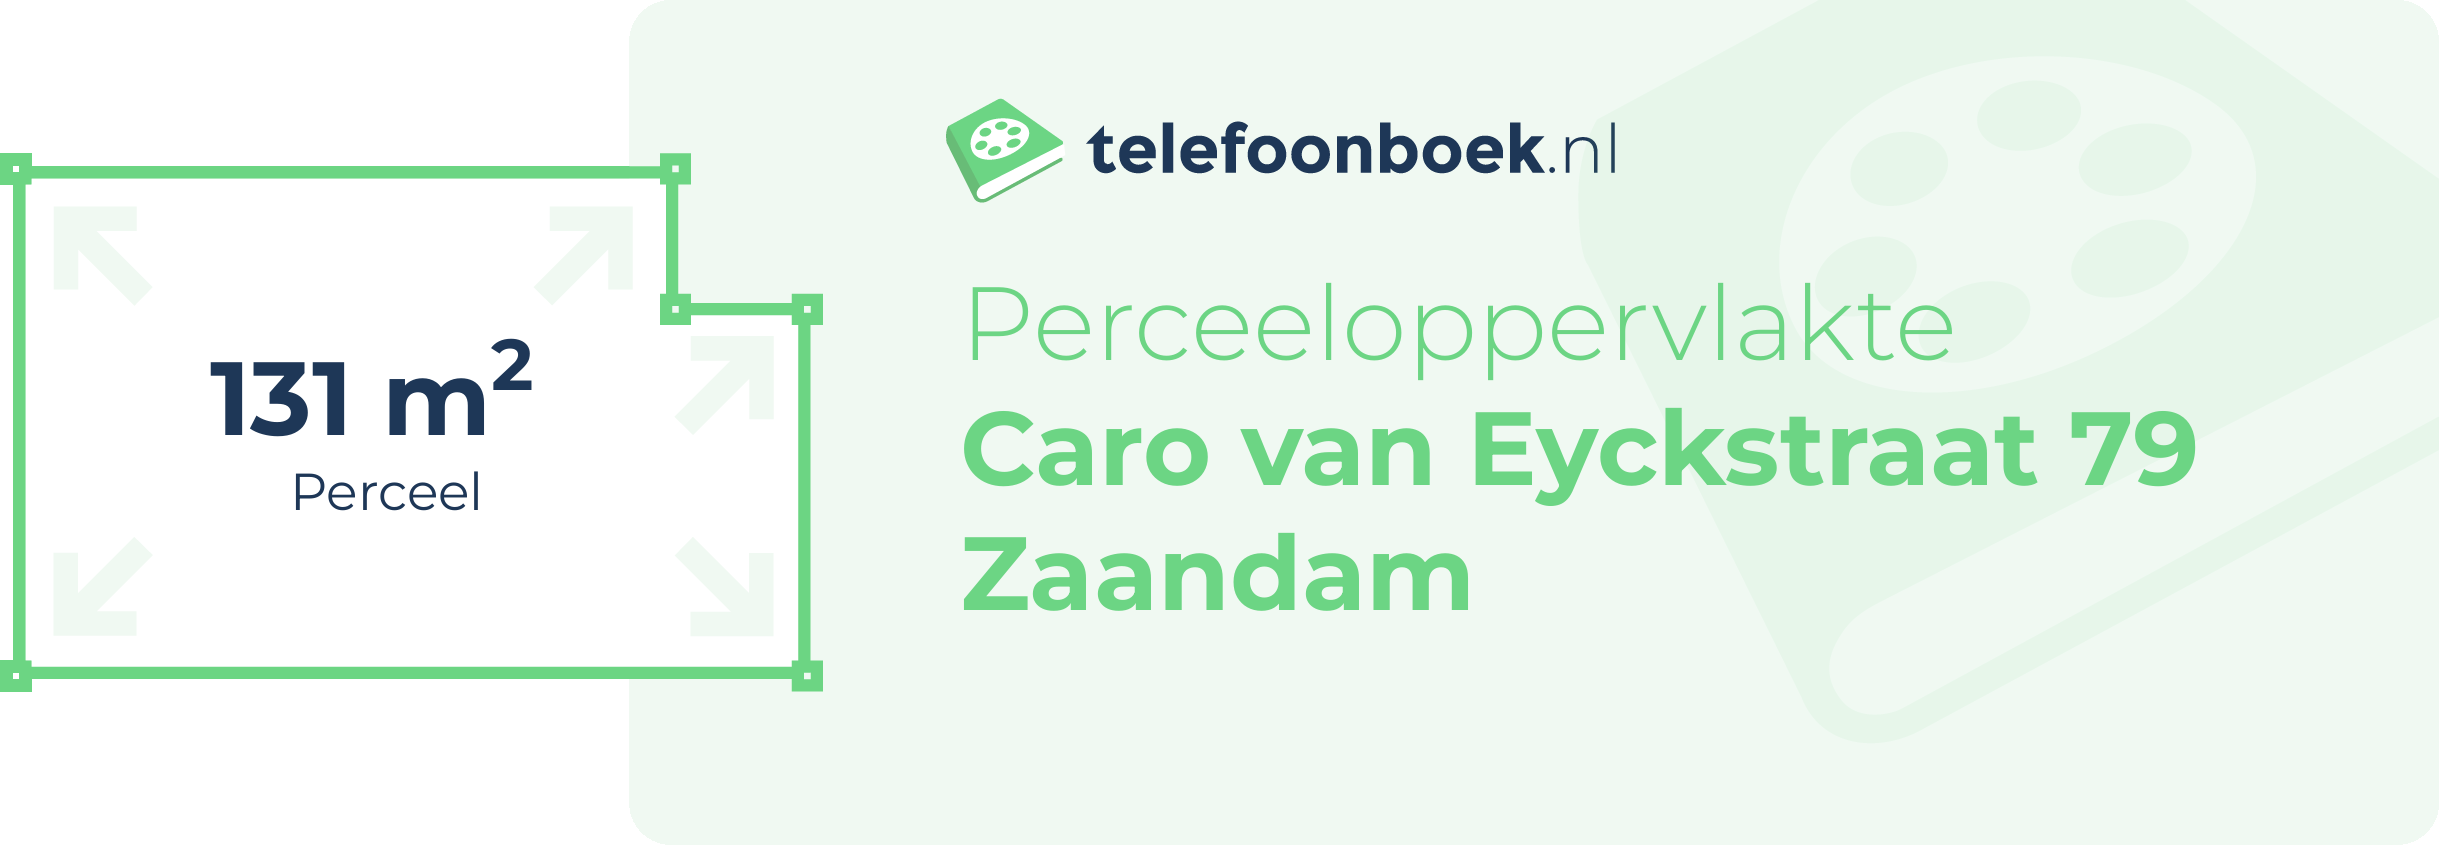 Perceeloppervlakte Caro Van Eyckstraat 79 Zaandam